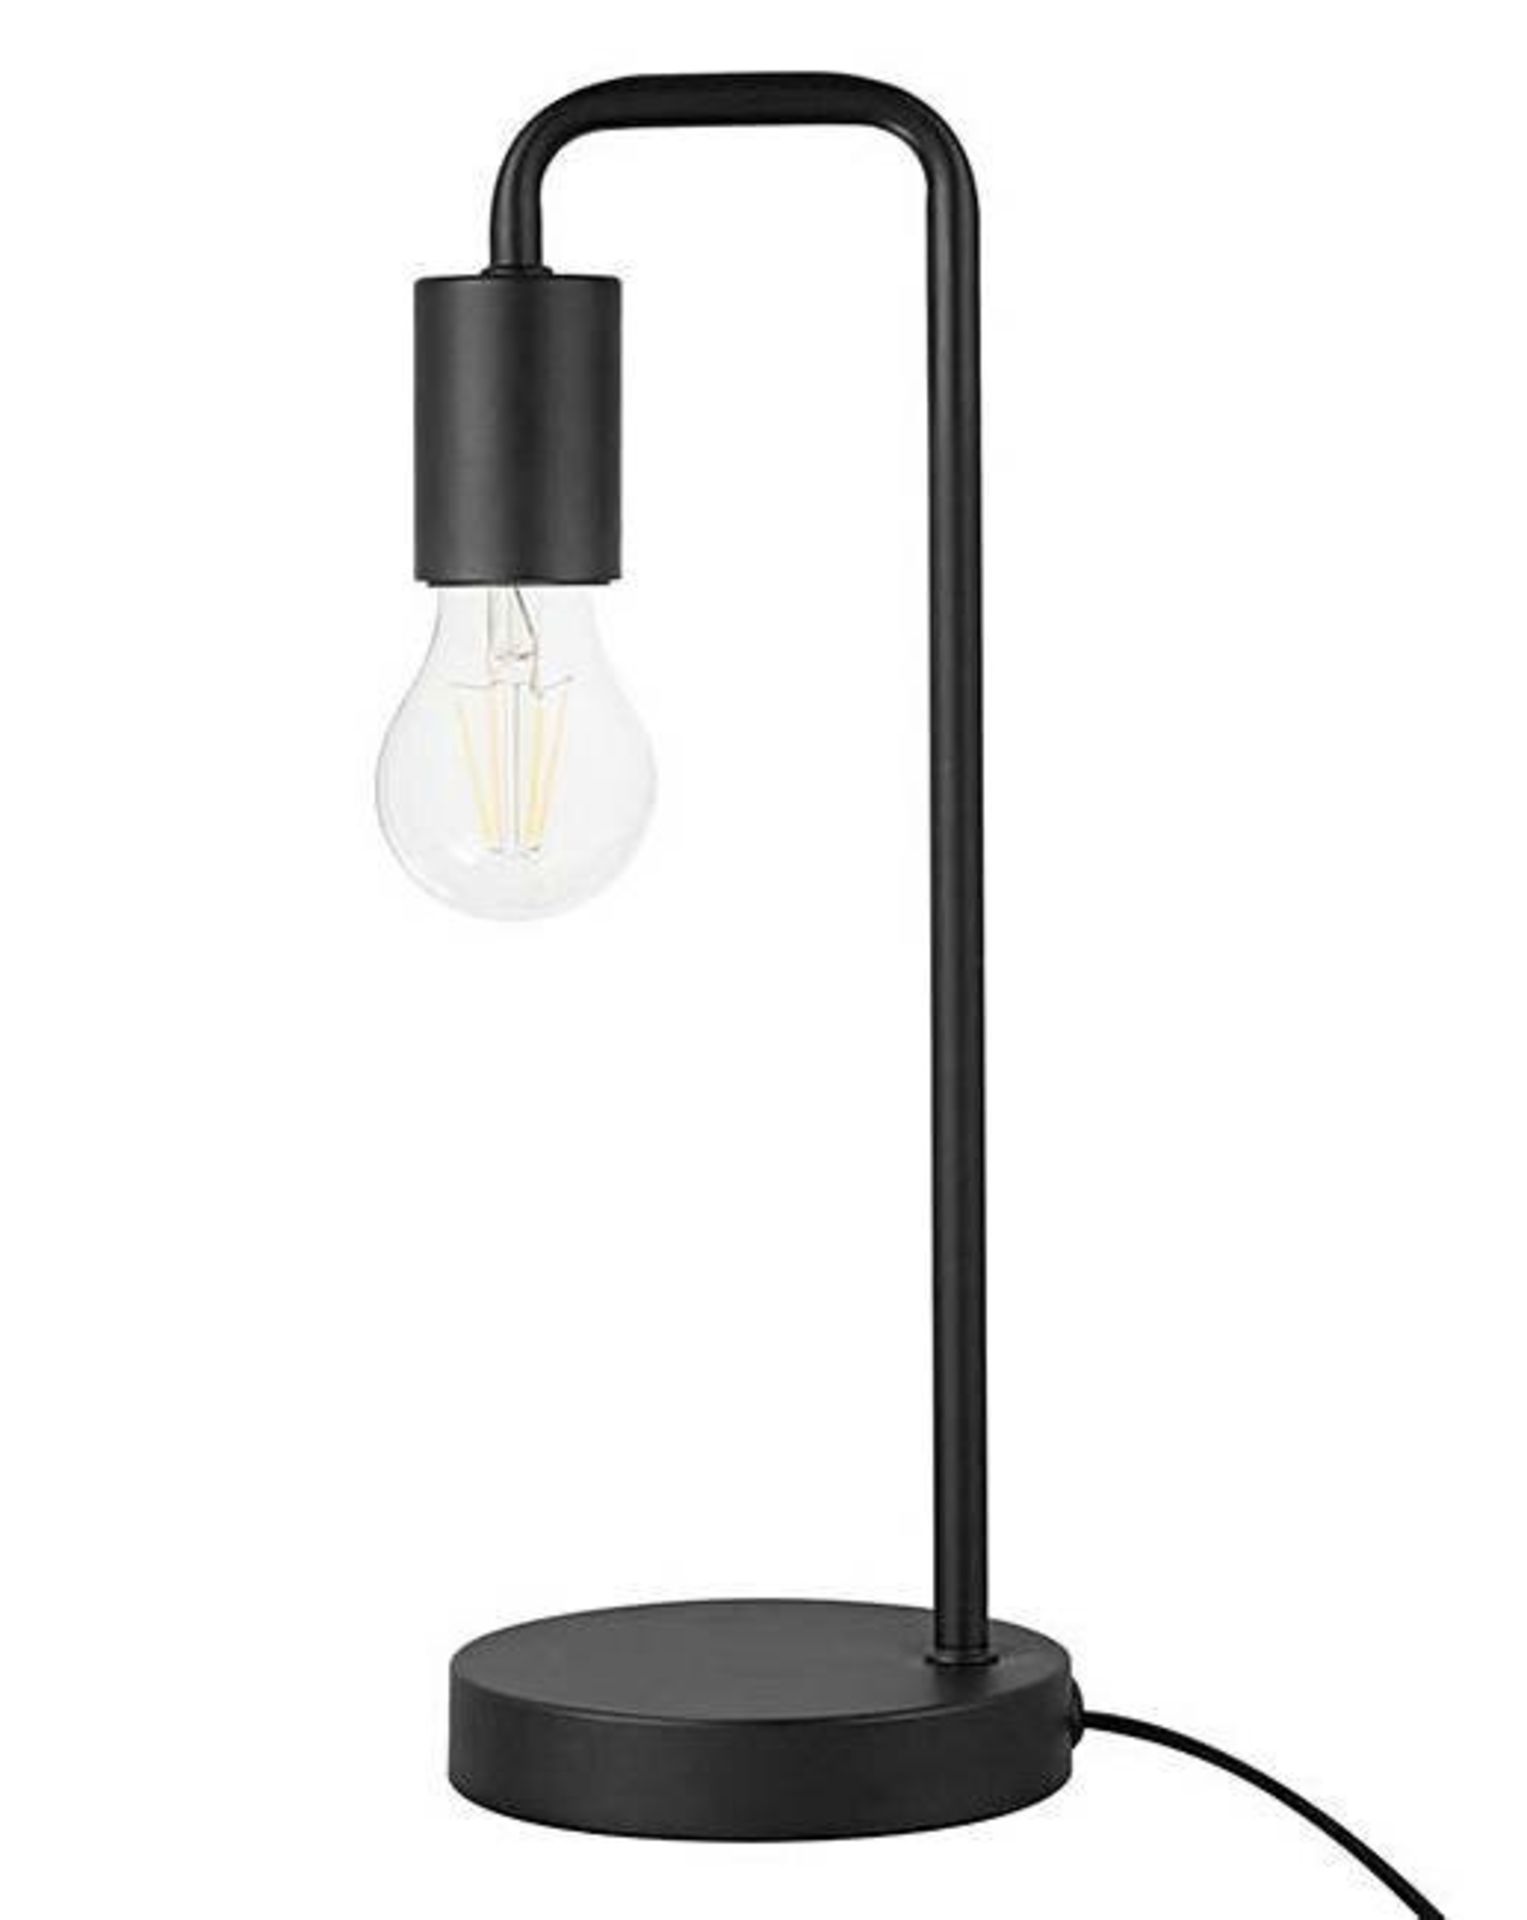 George Oliver Aydan 36cm Table Lamp - RRP £21.99 (